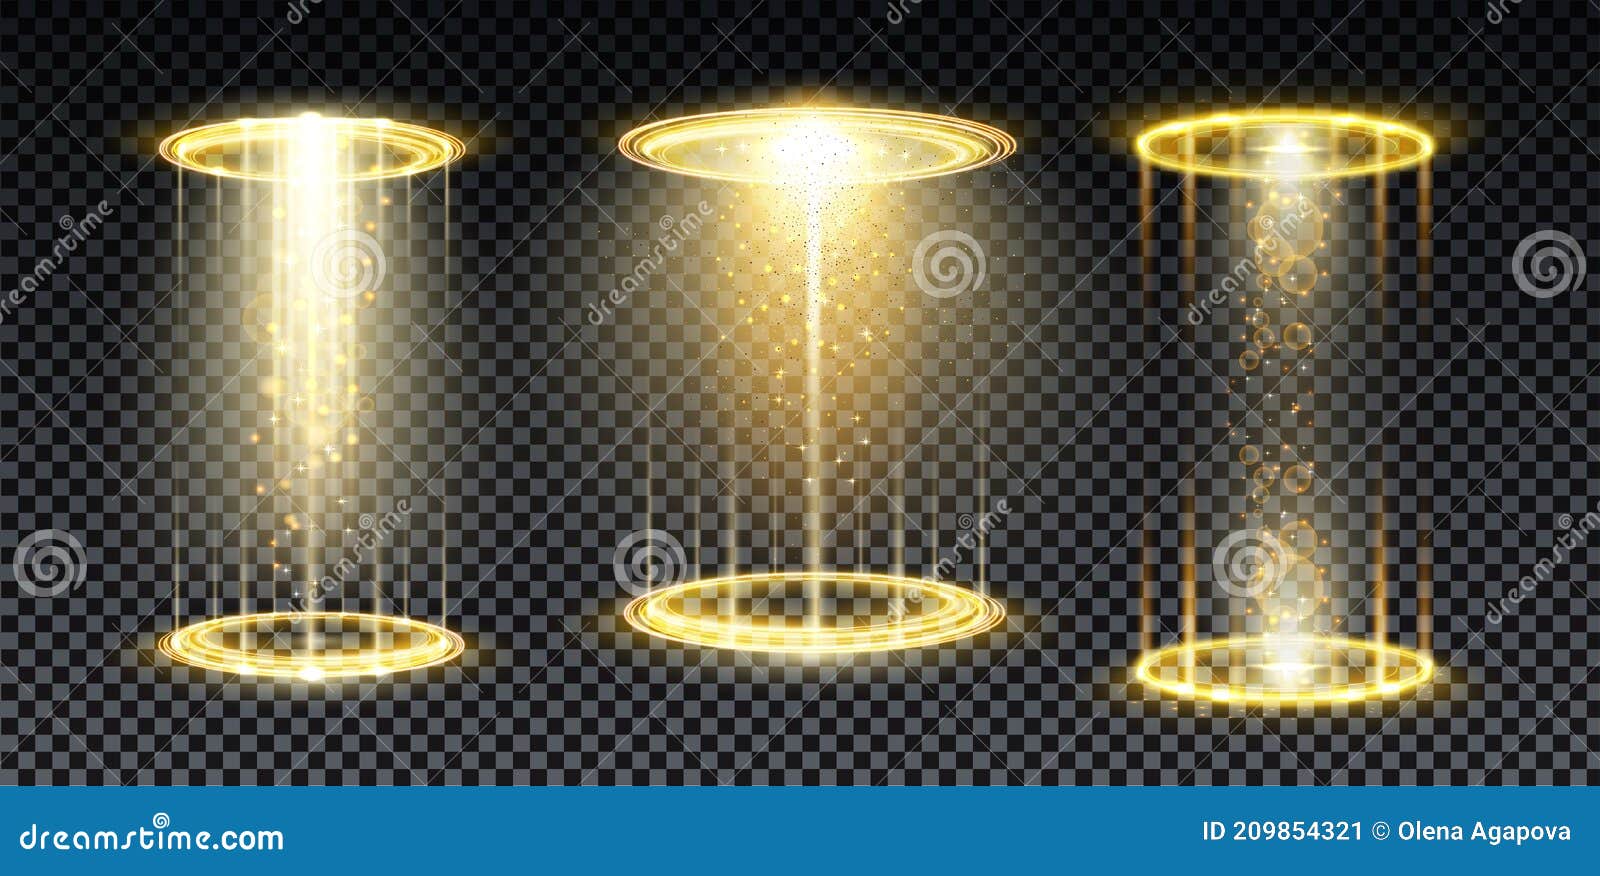 gold hologram portal. magic fantasy portal. magic circle teleport podium with hologram effect.  gold glow rays